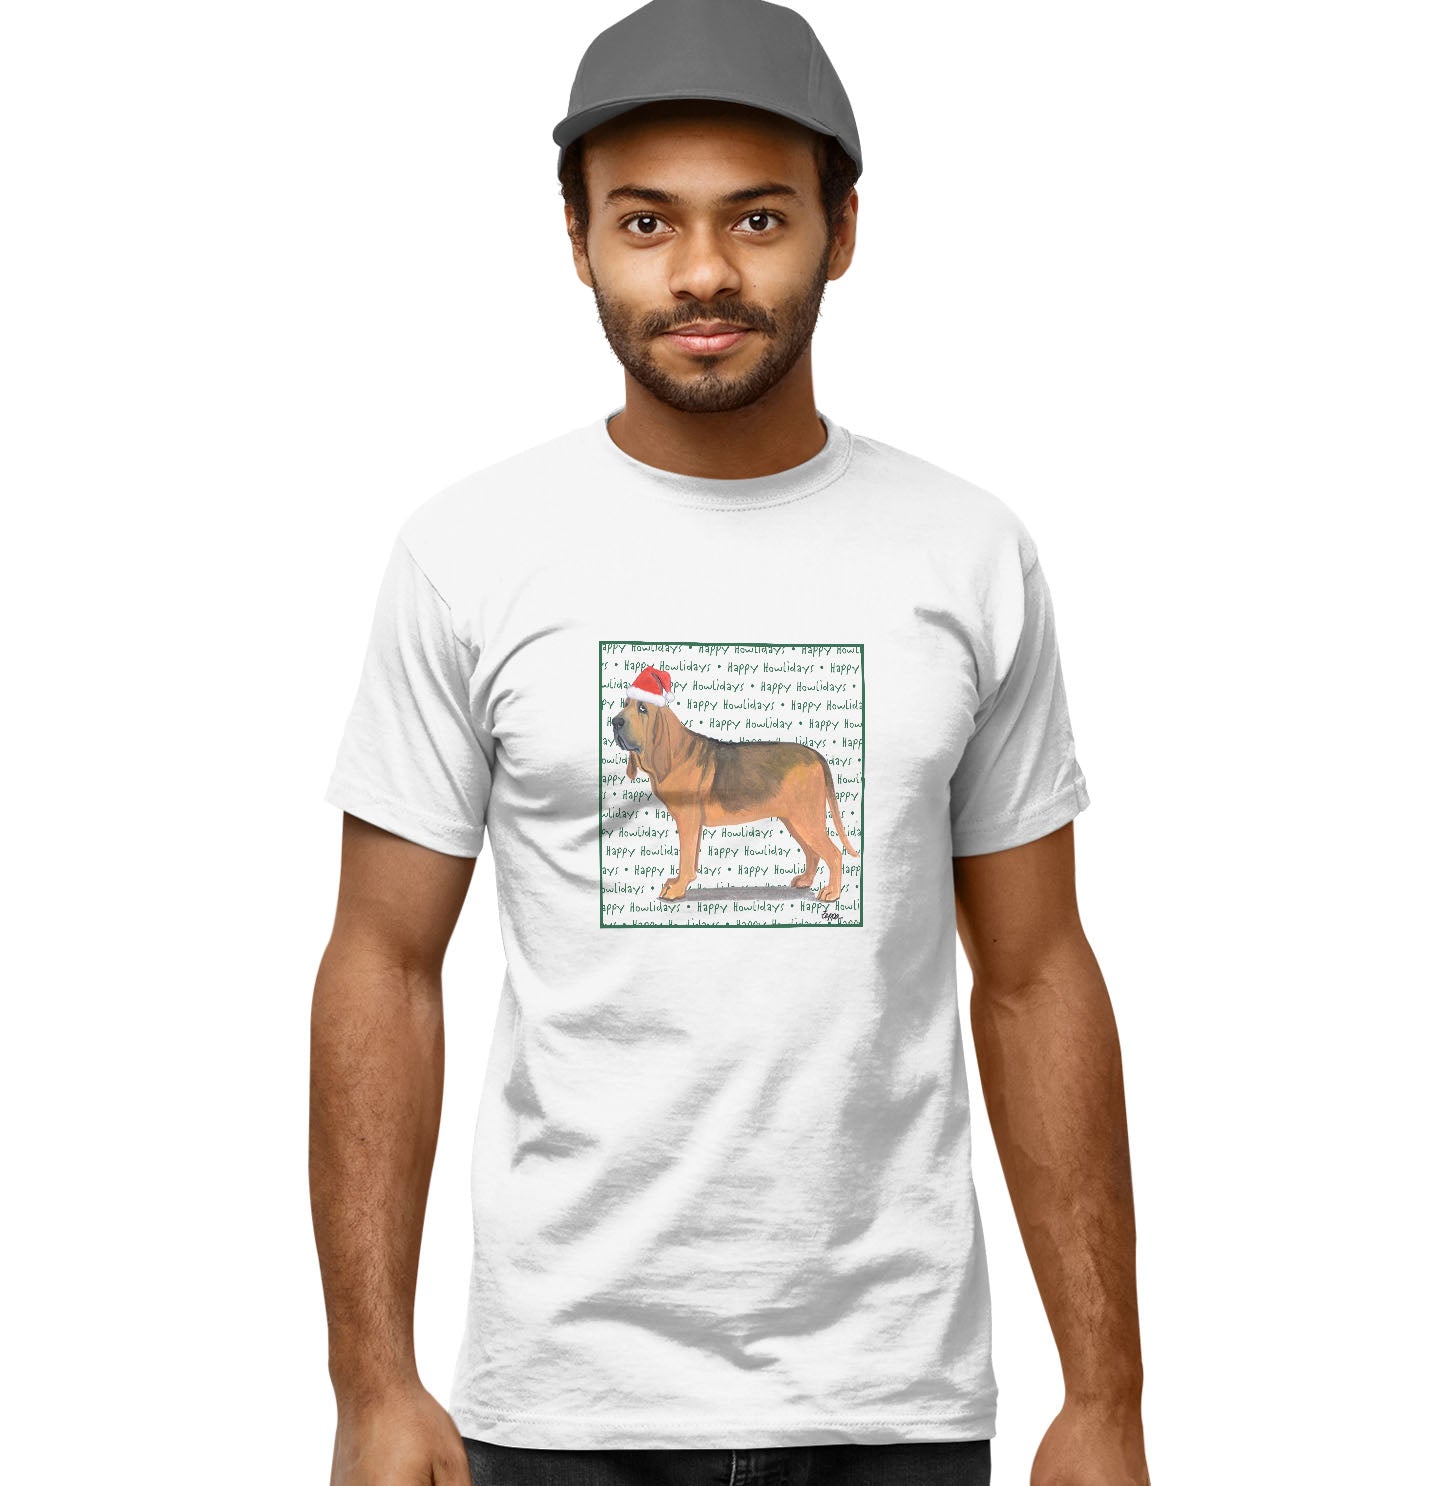 Bloodhound Happy Howlidays Text - Adult Unisex T-Shirt